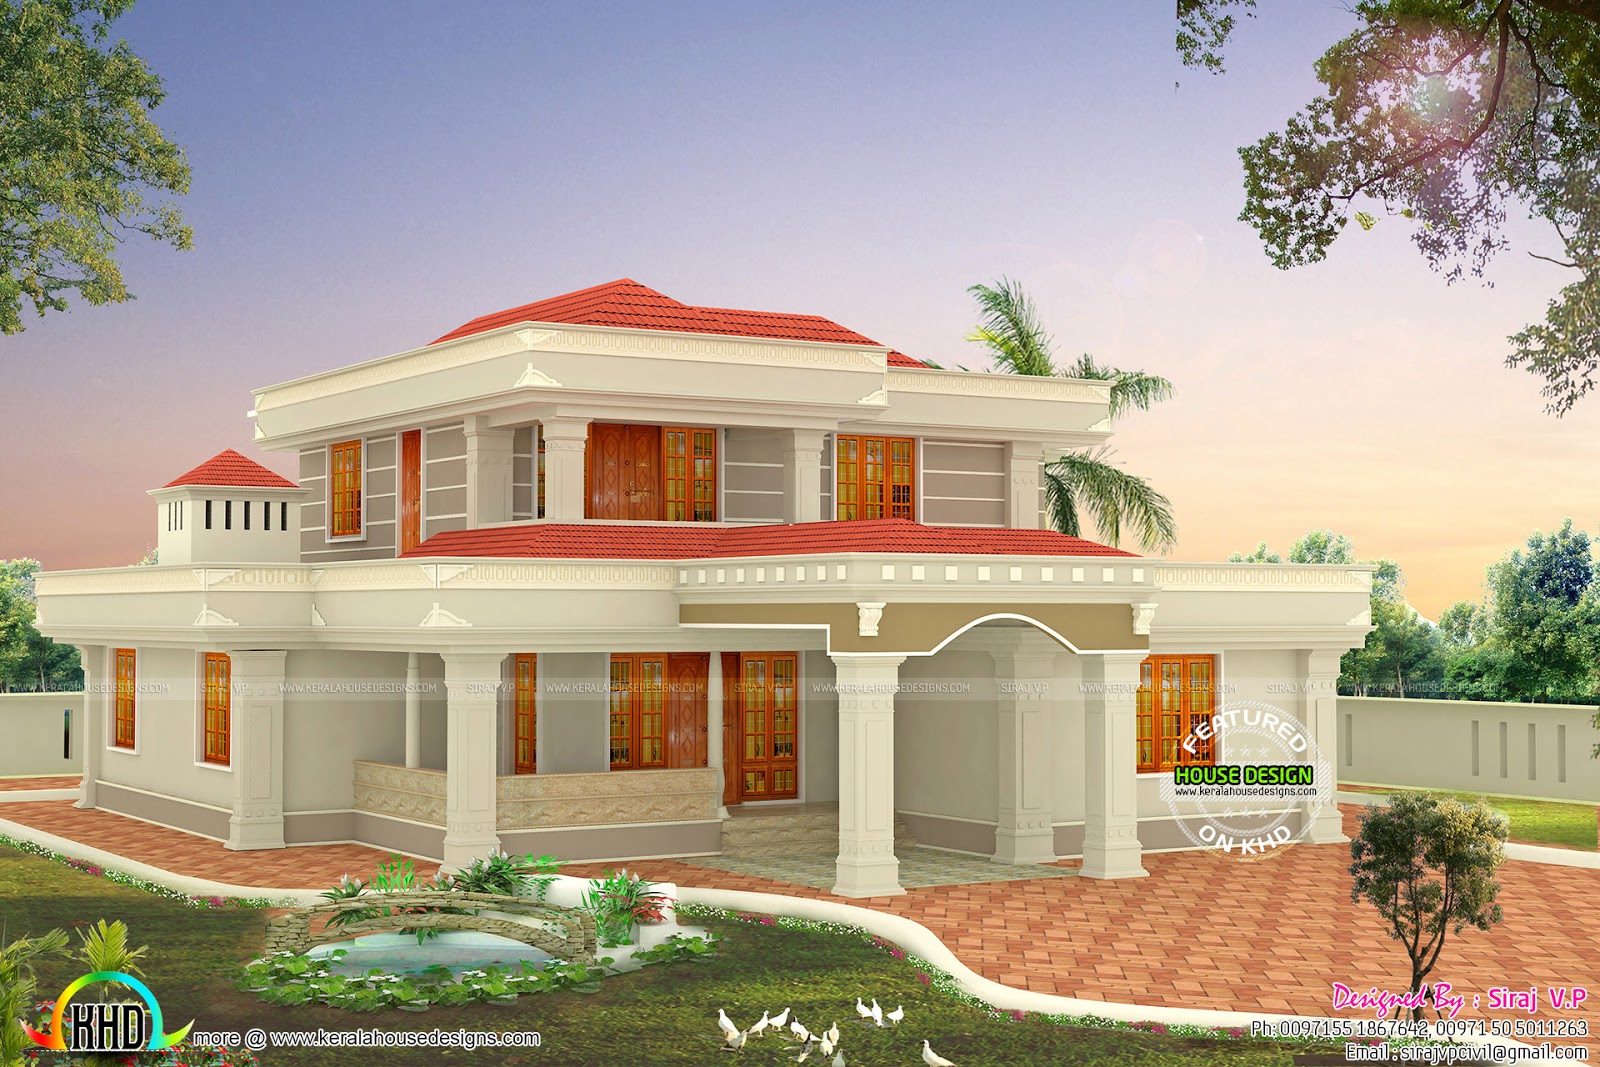  5  bedroom  2800 sq ft modern home  Kerala  home  design  